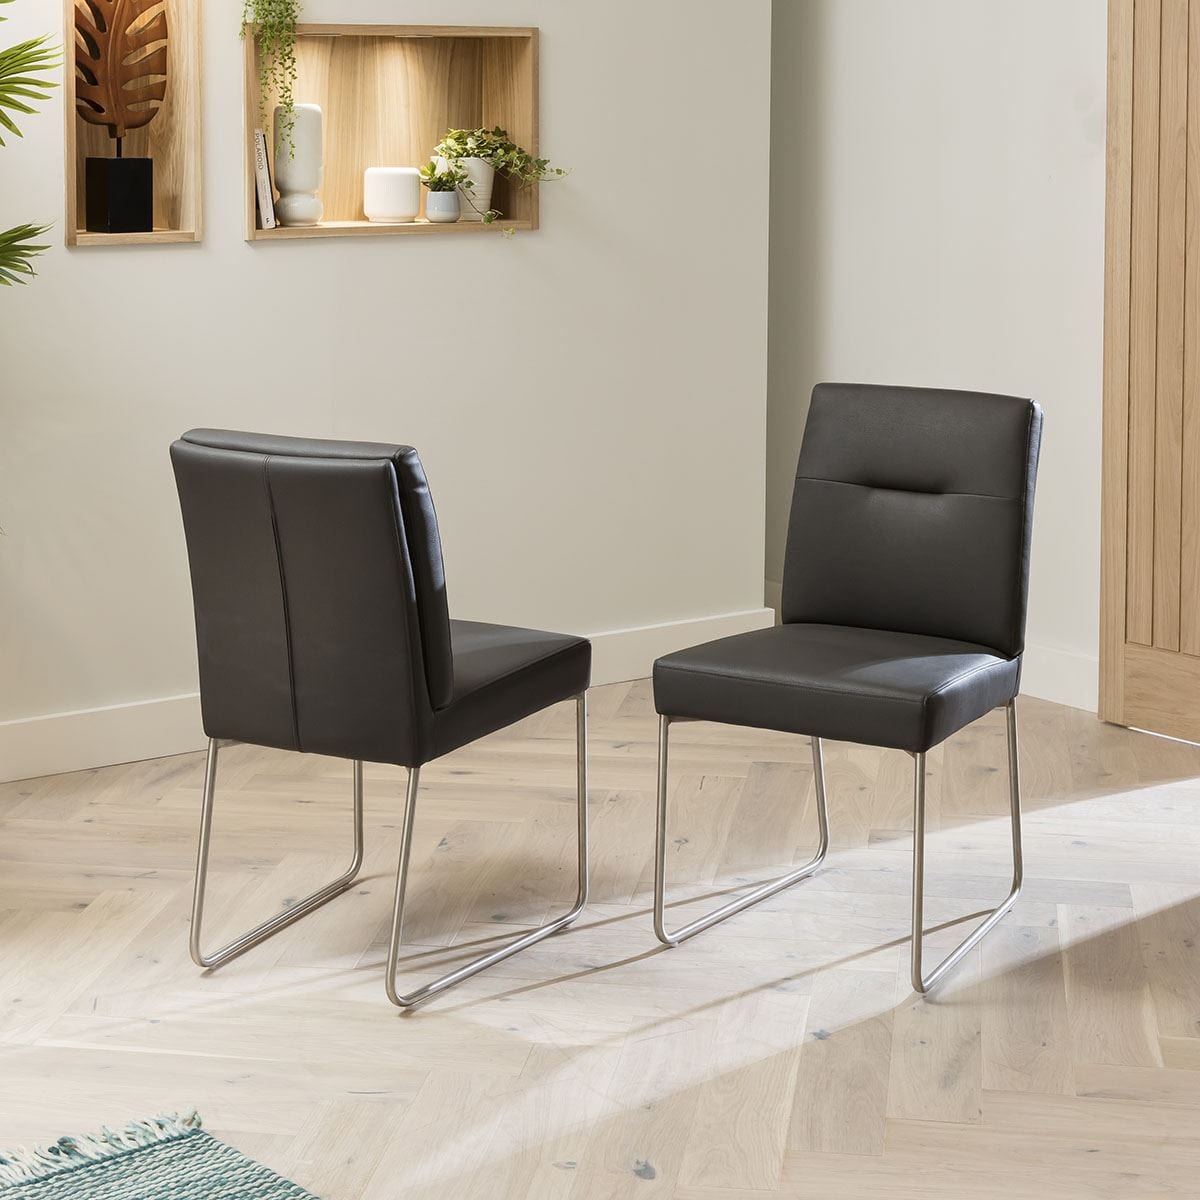 Quatropi Set of 2 Quatropi Faux Leather Dining Chairs - Grey PU Leather, Metal Legs